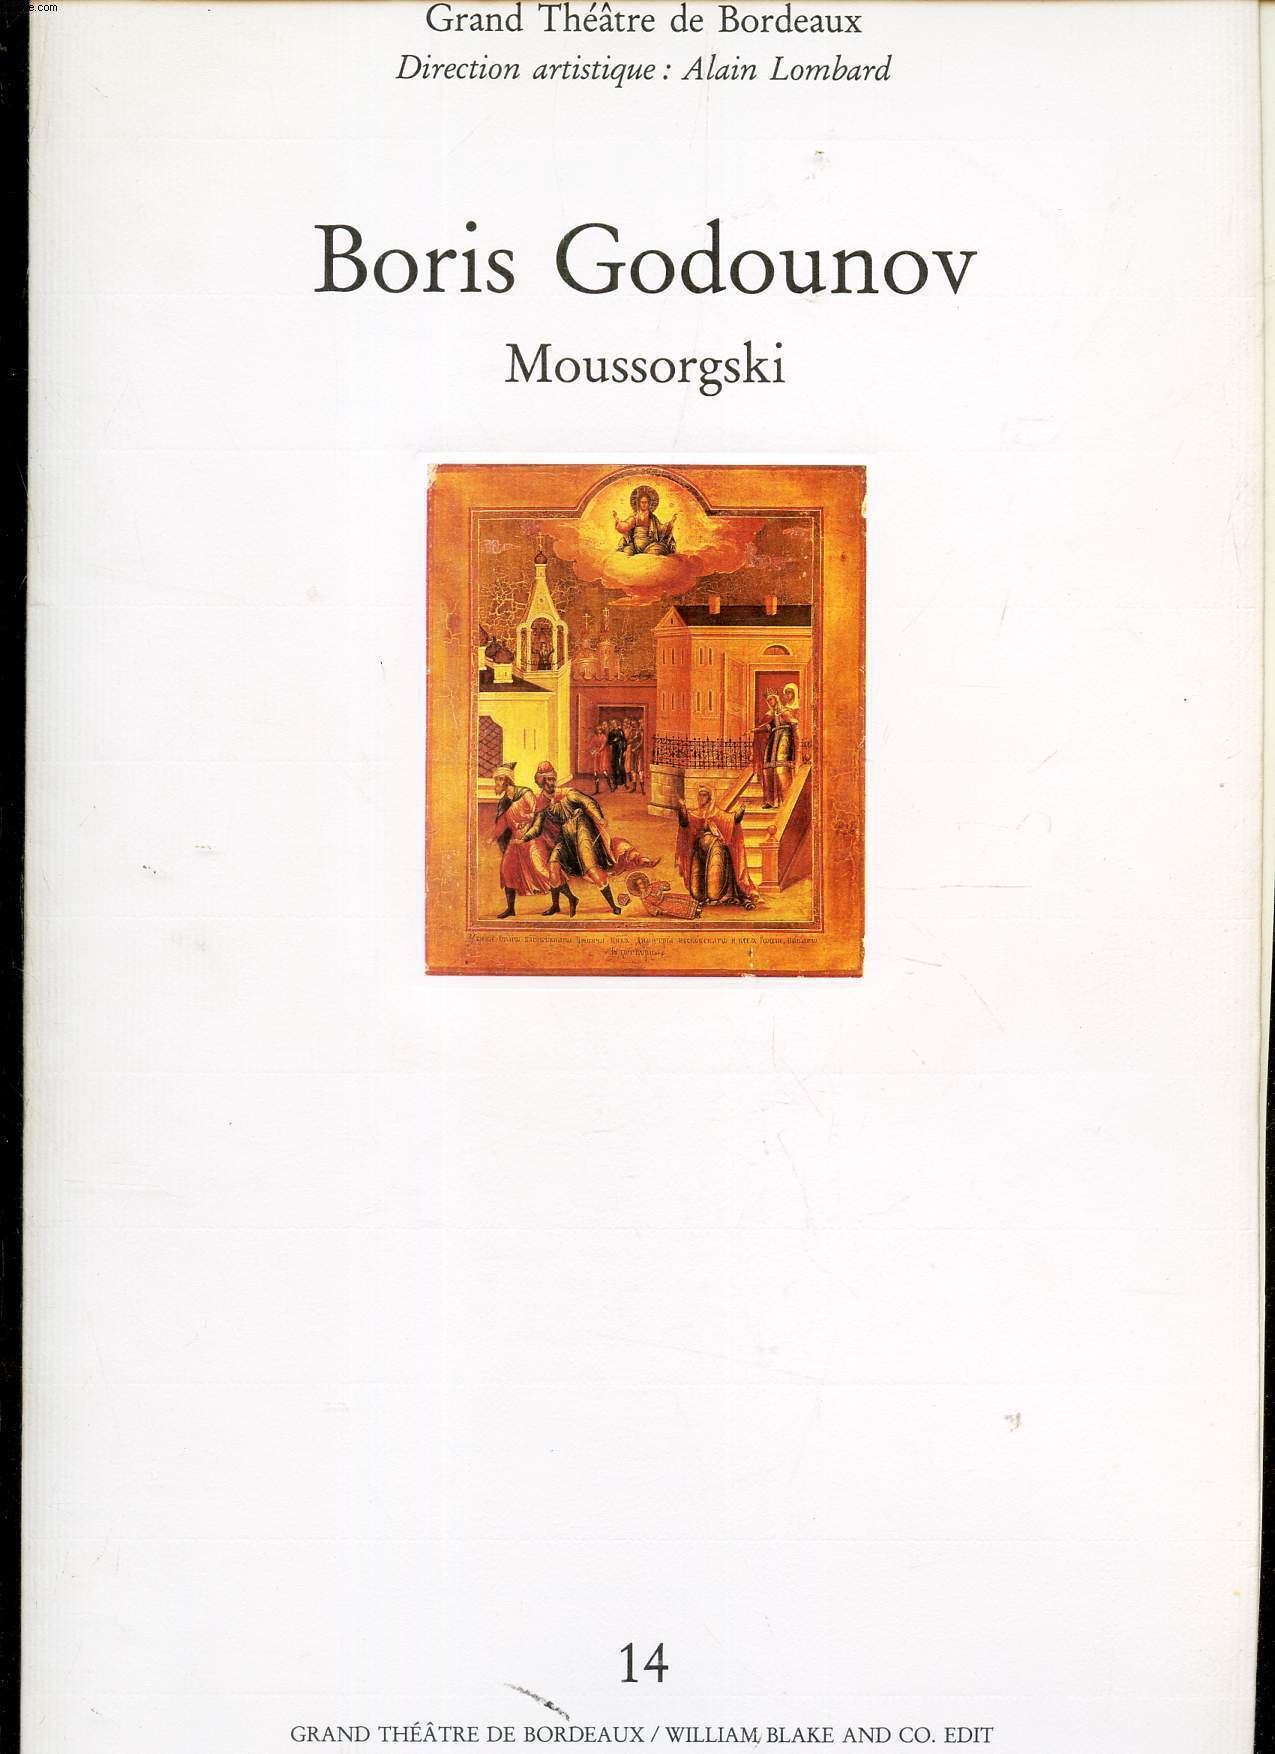 BORIS GODOUNOV - MOUSSORGSKI.